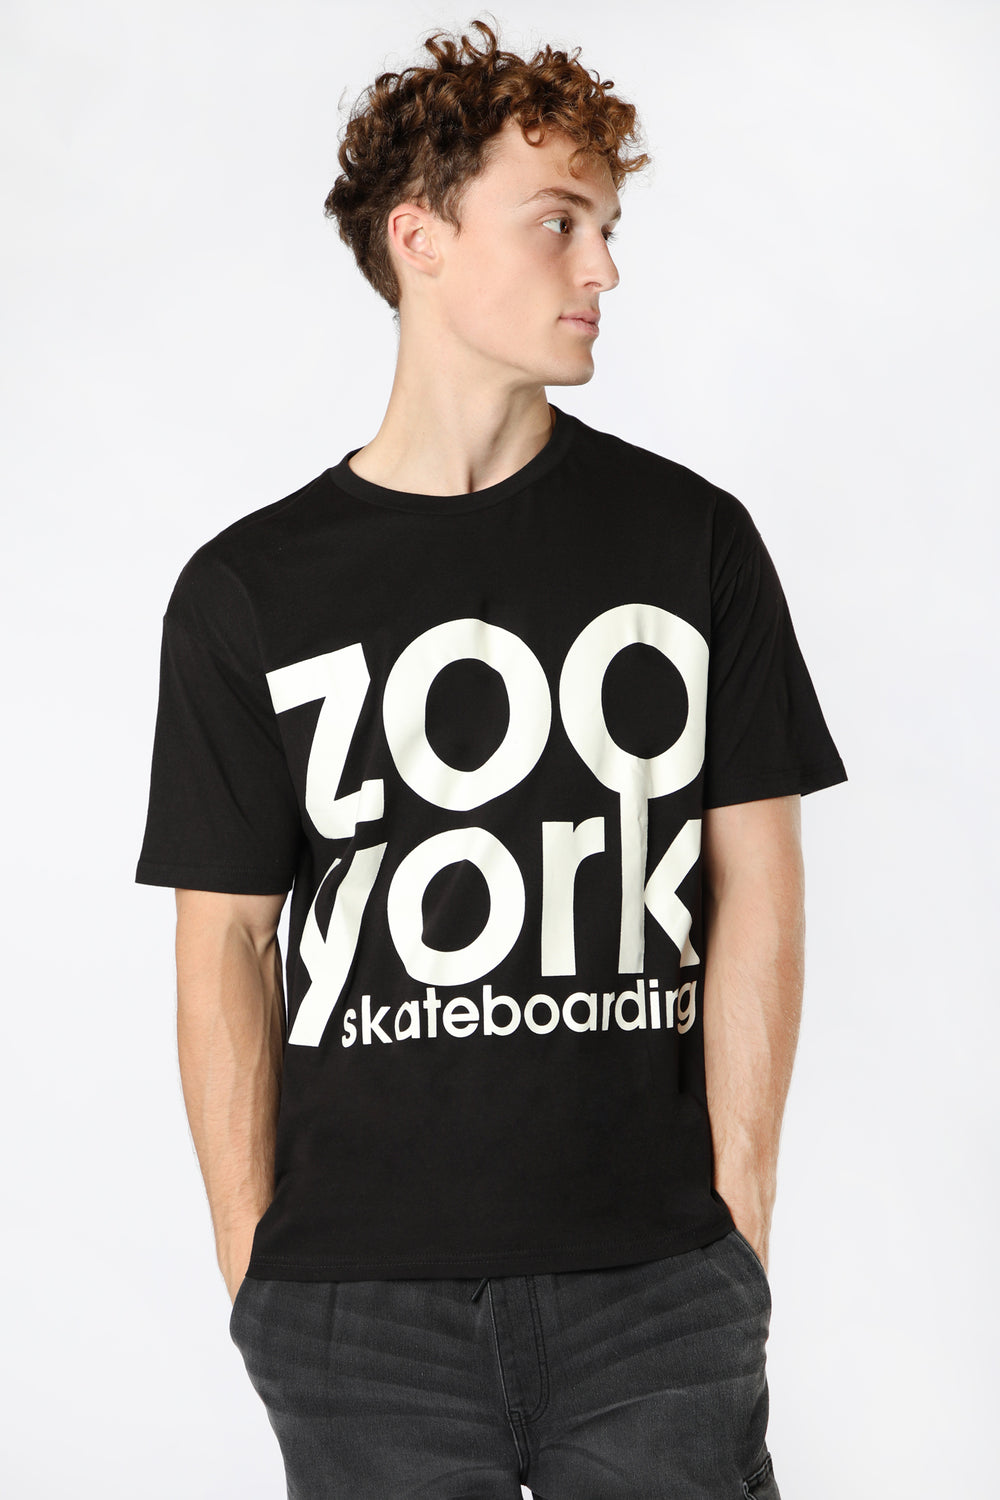 T-Shirt Unisexe Imprimé Grand Logo Zoo York Skateboarding Noir